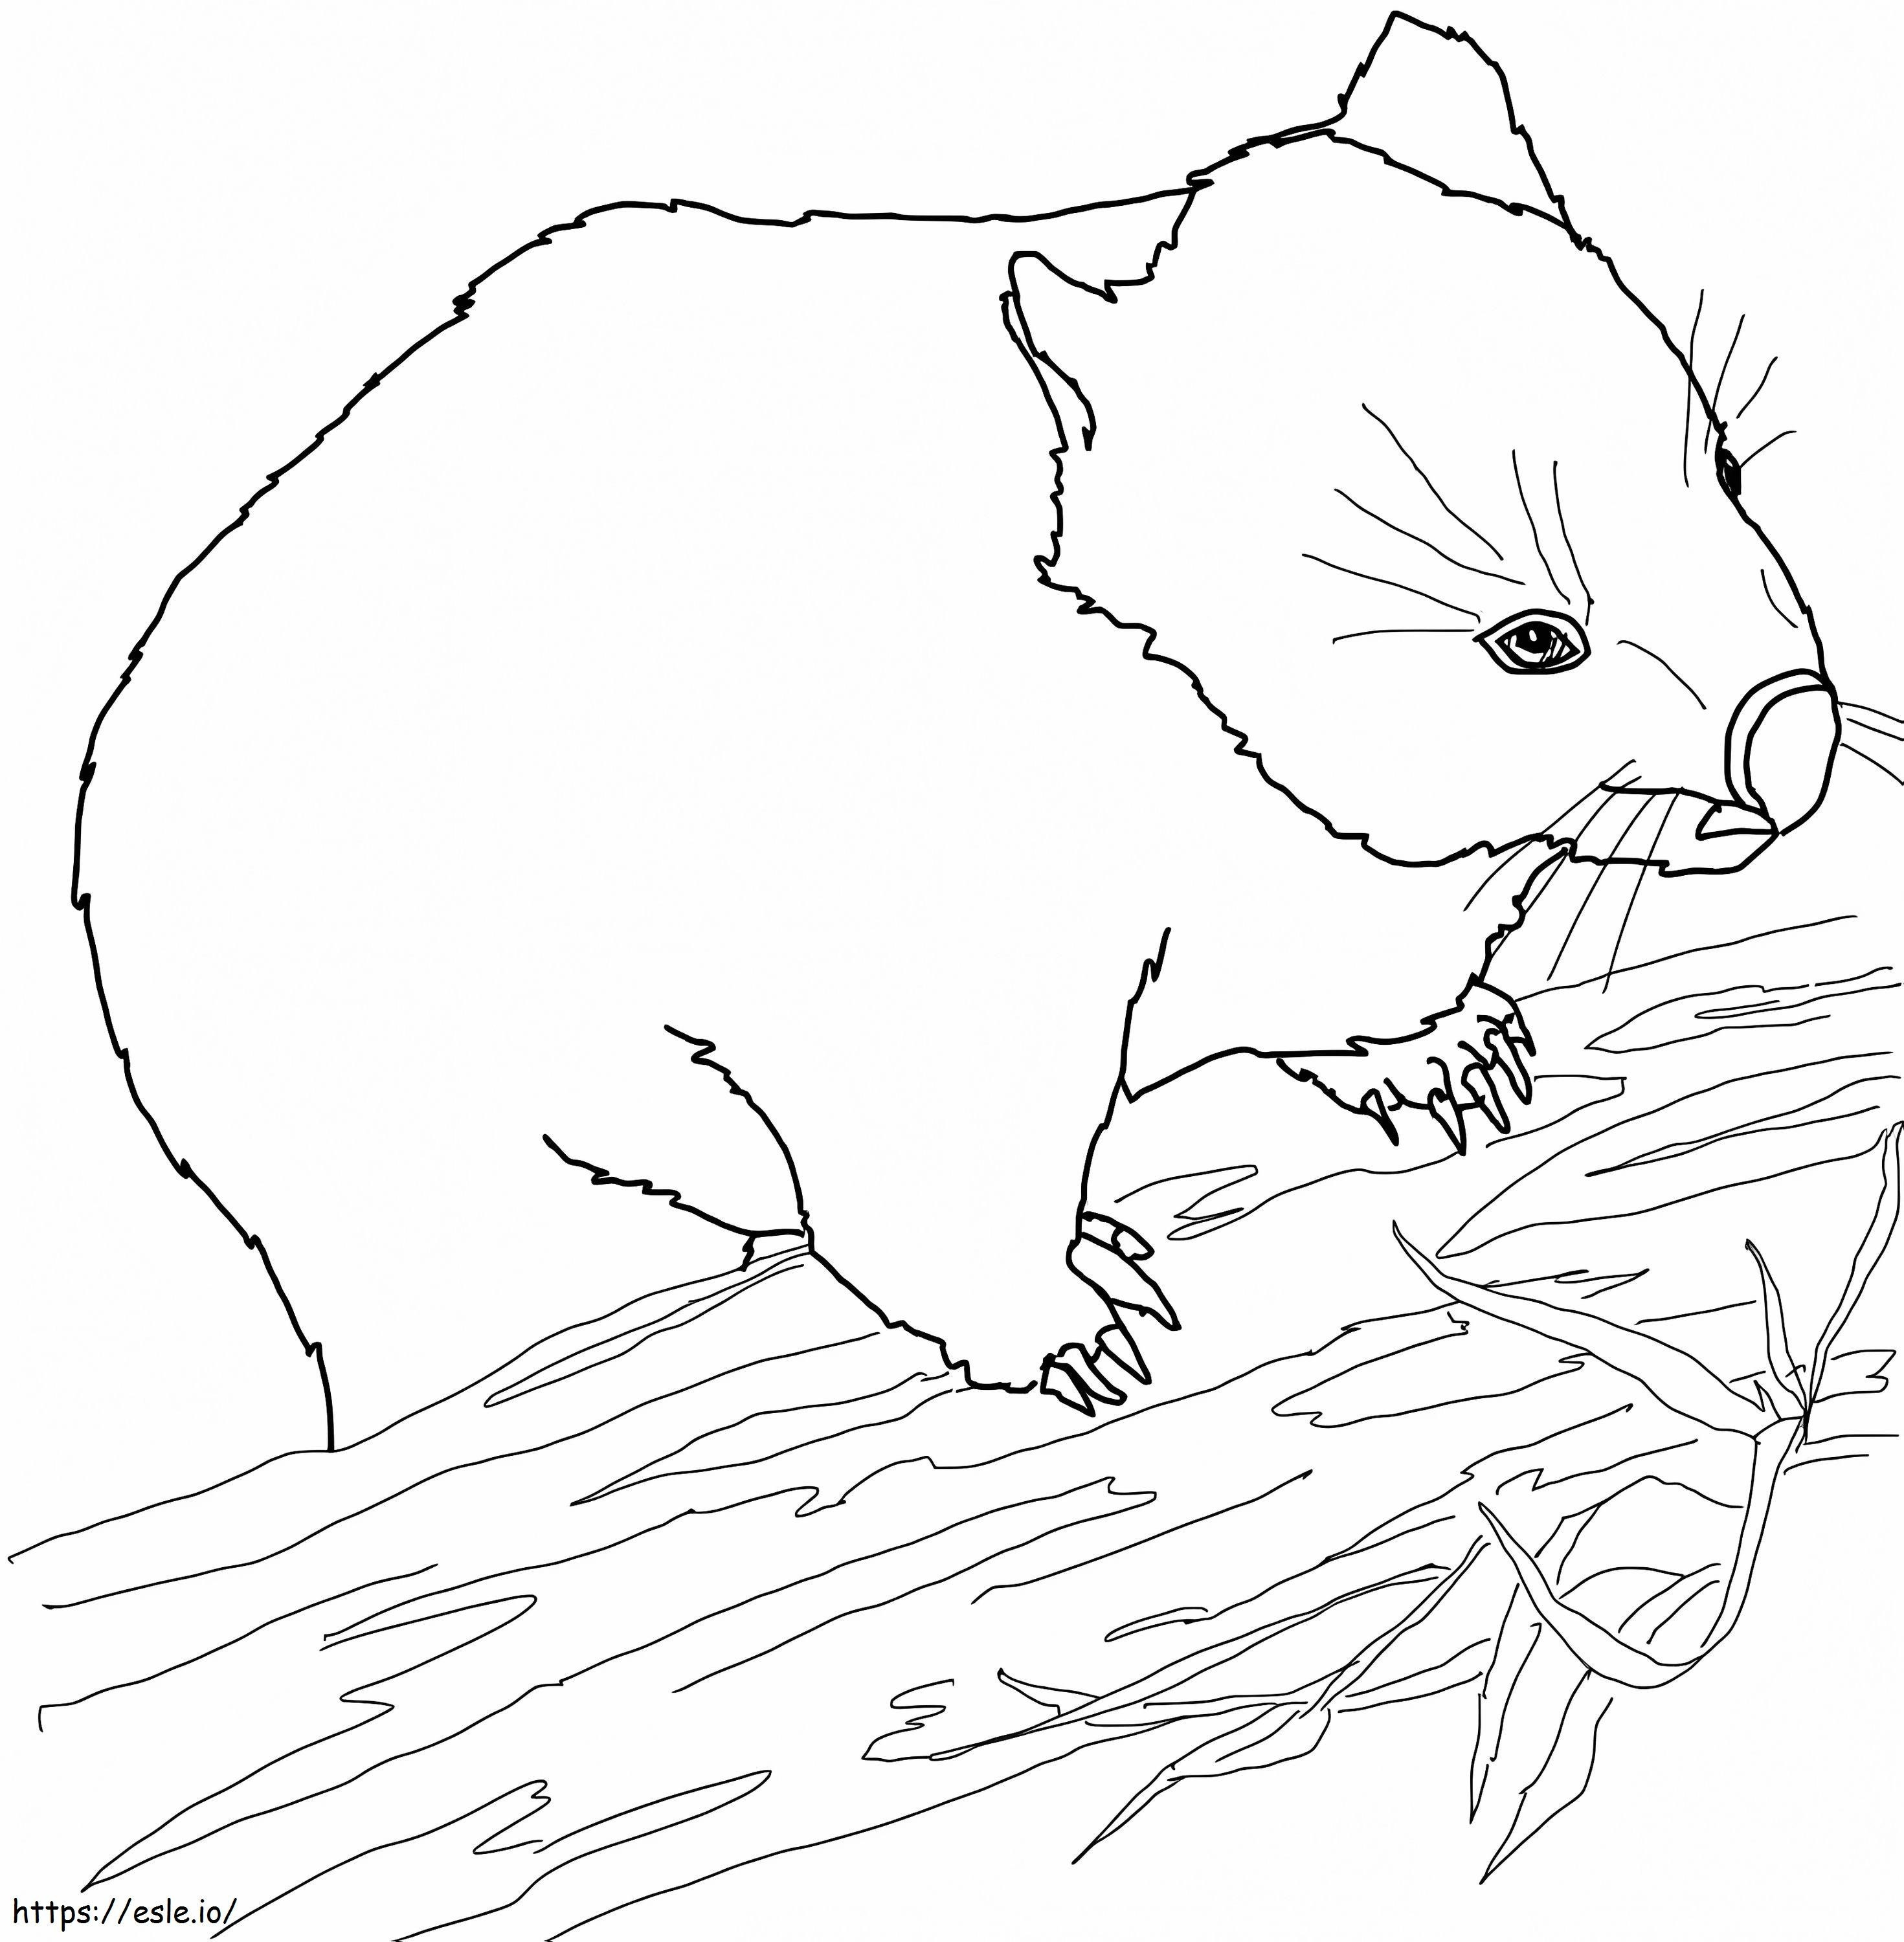 Australian Wombat coloring page